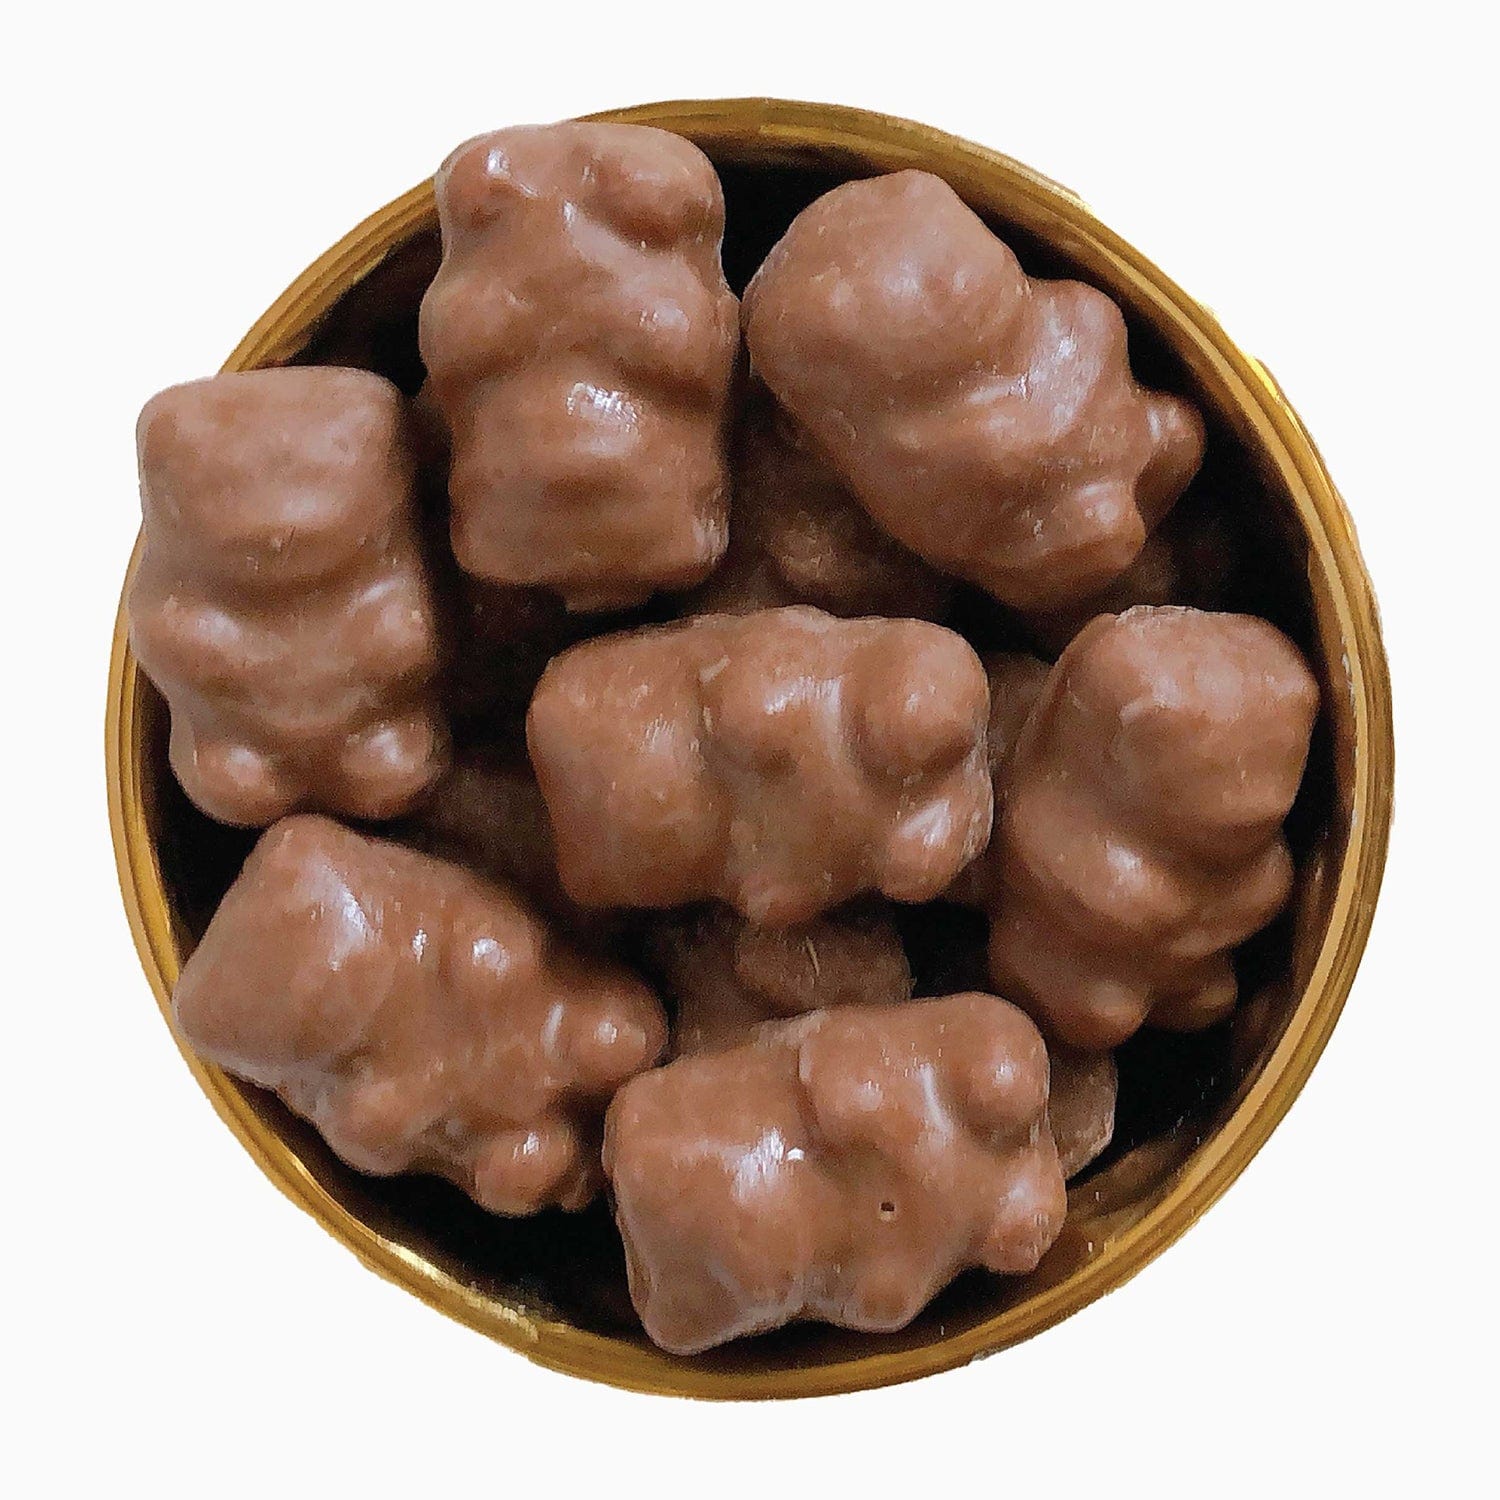 https://cdn.shopify.com/s/files/1/1341/1521/files/lolli-and-pops-bulk-chocolate-covered-cinnamon-bears-34749117825224_1600x.jpg?v=1701892798